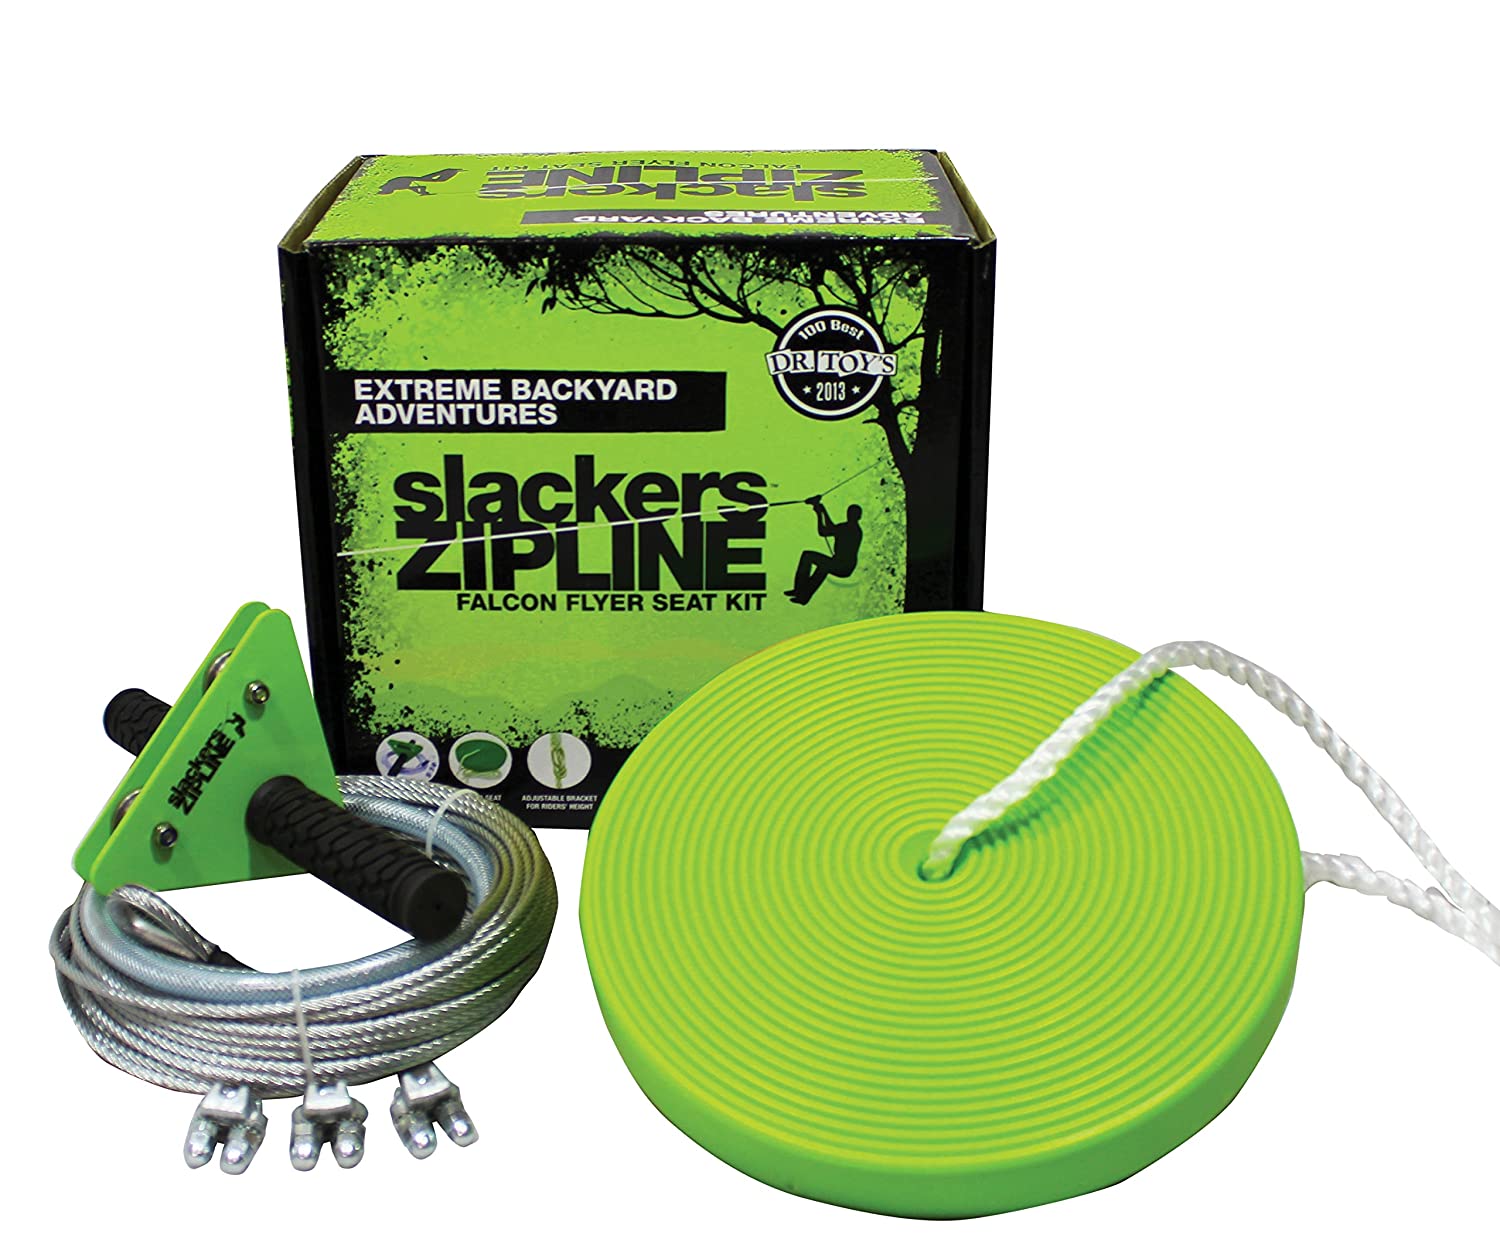 Slackers 40’ Zipline Falcon Series Kit with Seat